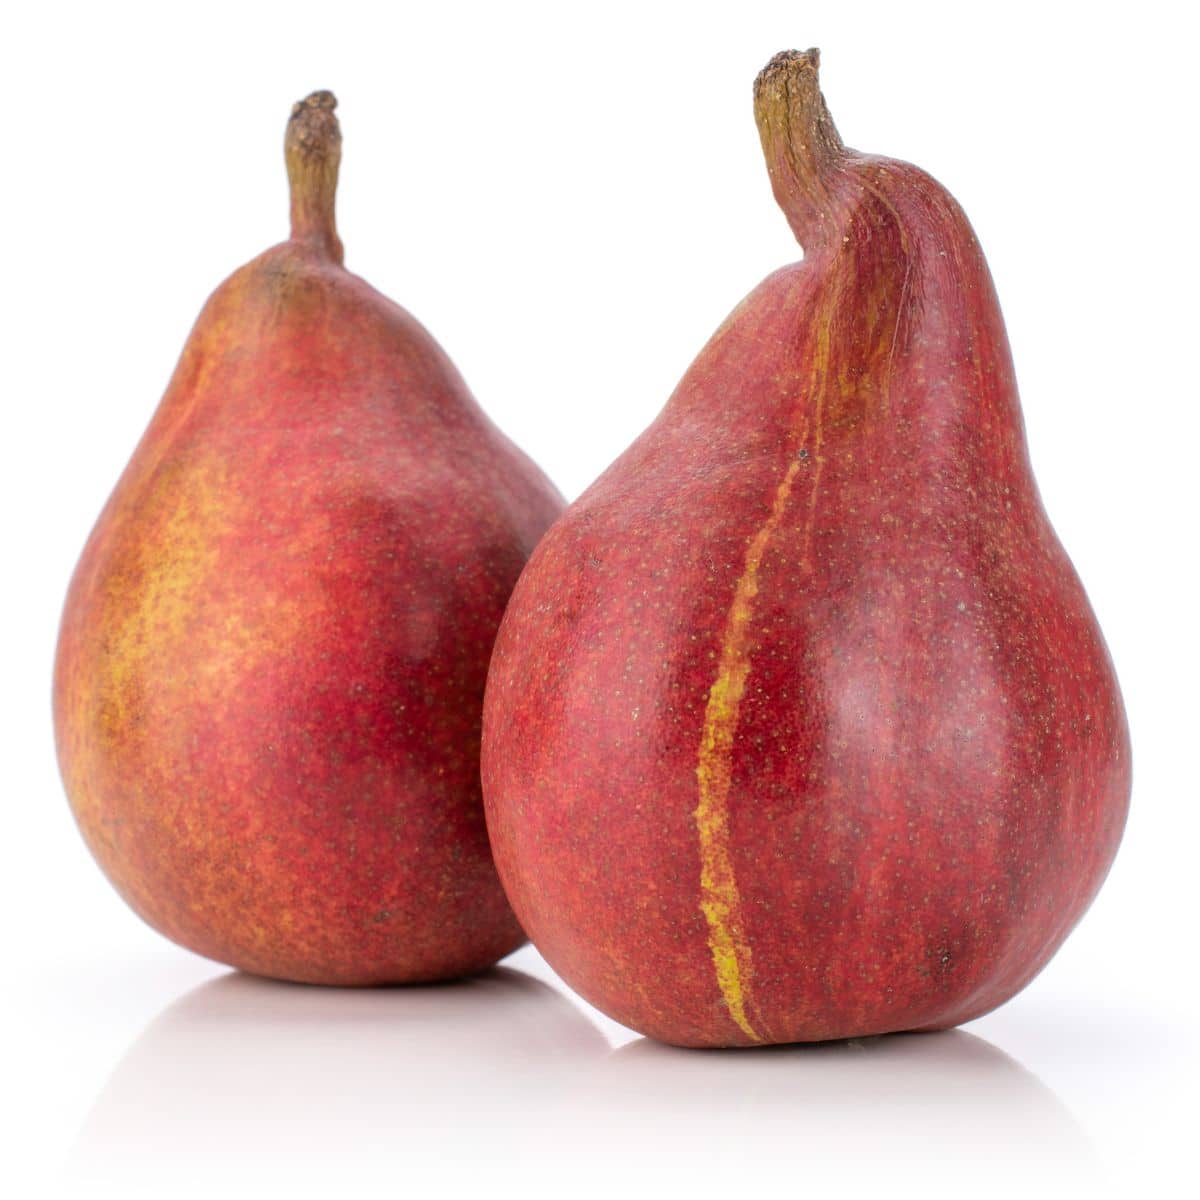 Stark crimson pears on a white background.